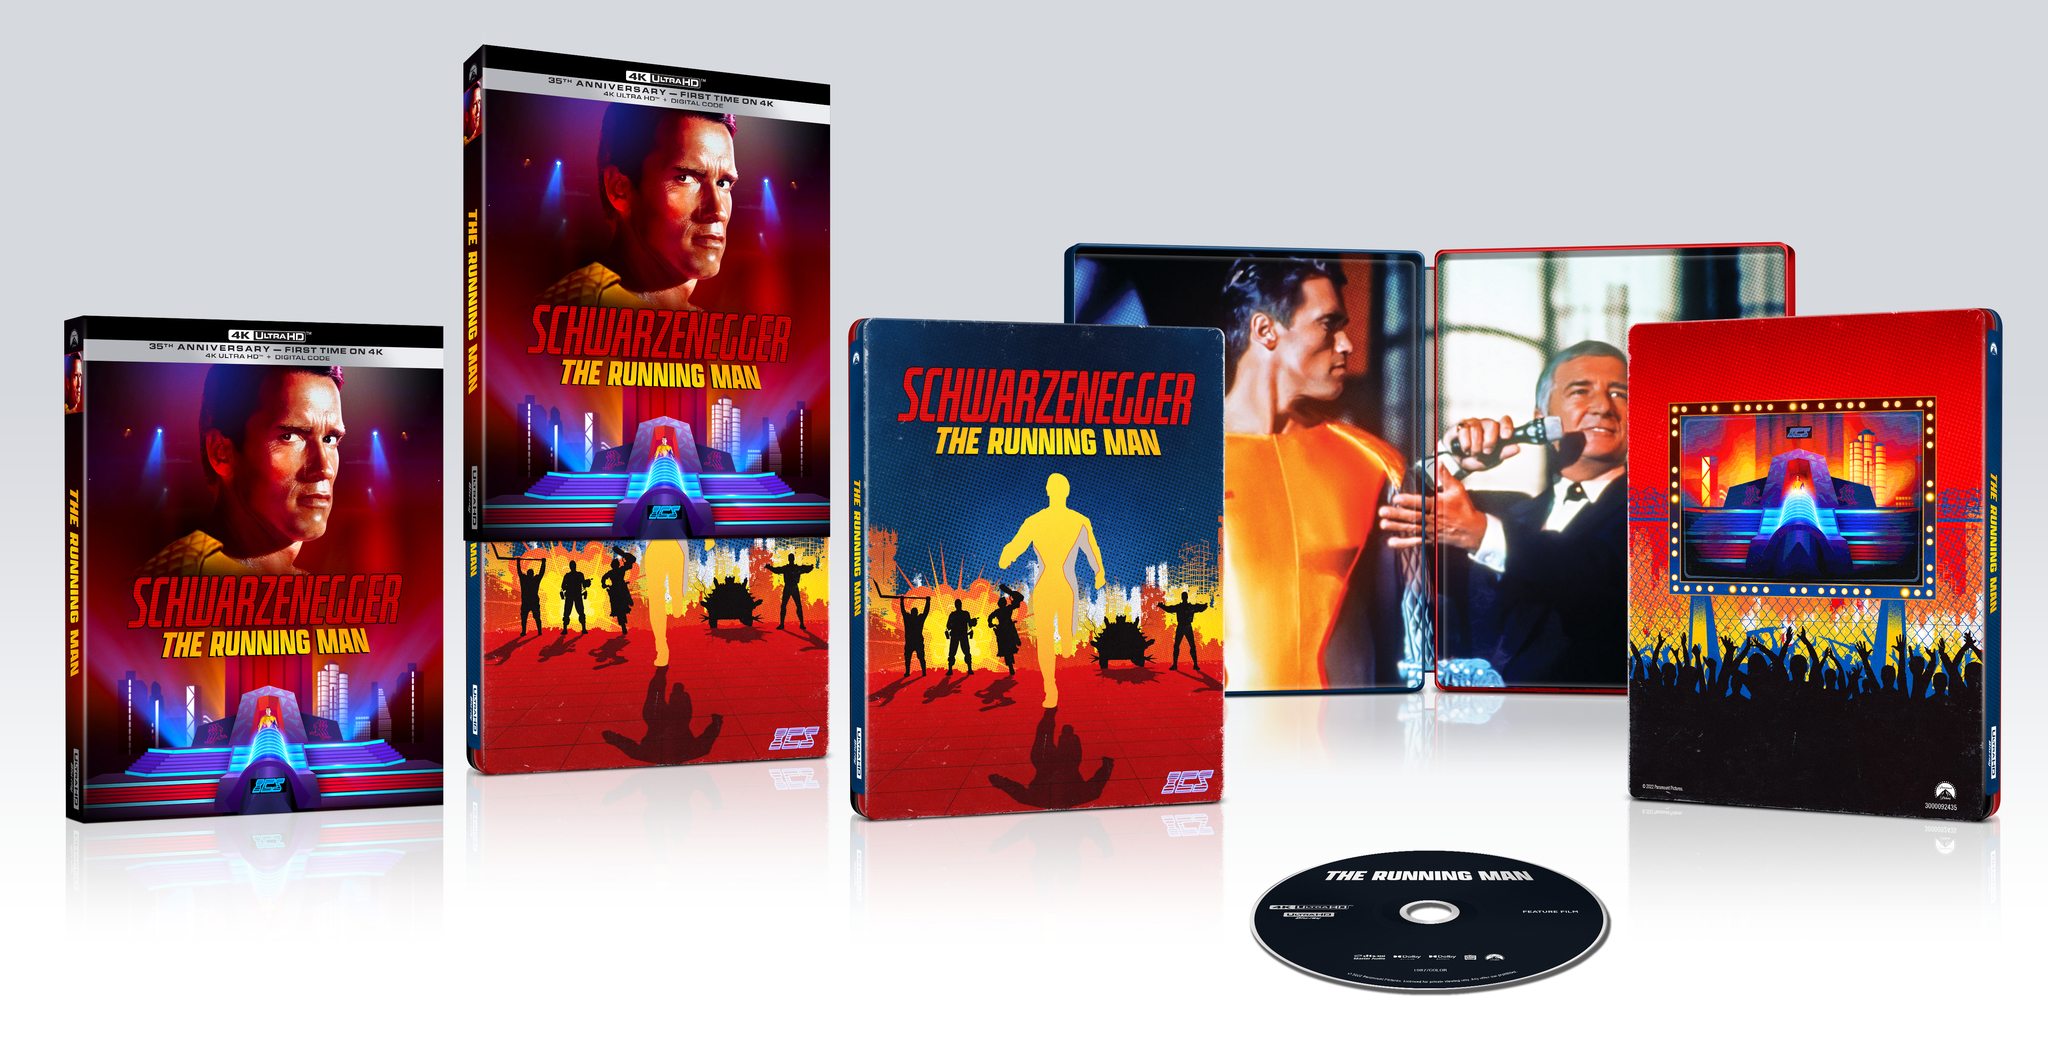 Best Buy: The Running Man [SteelBook] [Includes Digital Copy] [4K Ultra HD  Blu-ray] [1987]